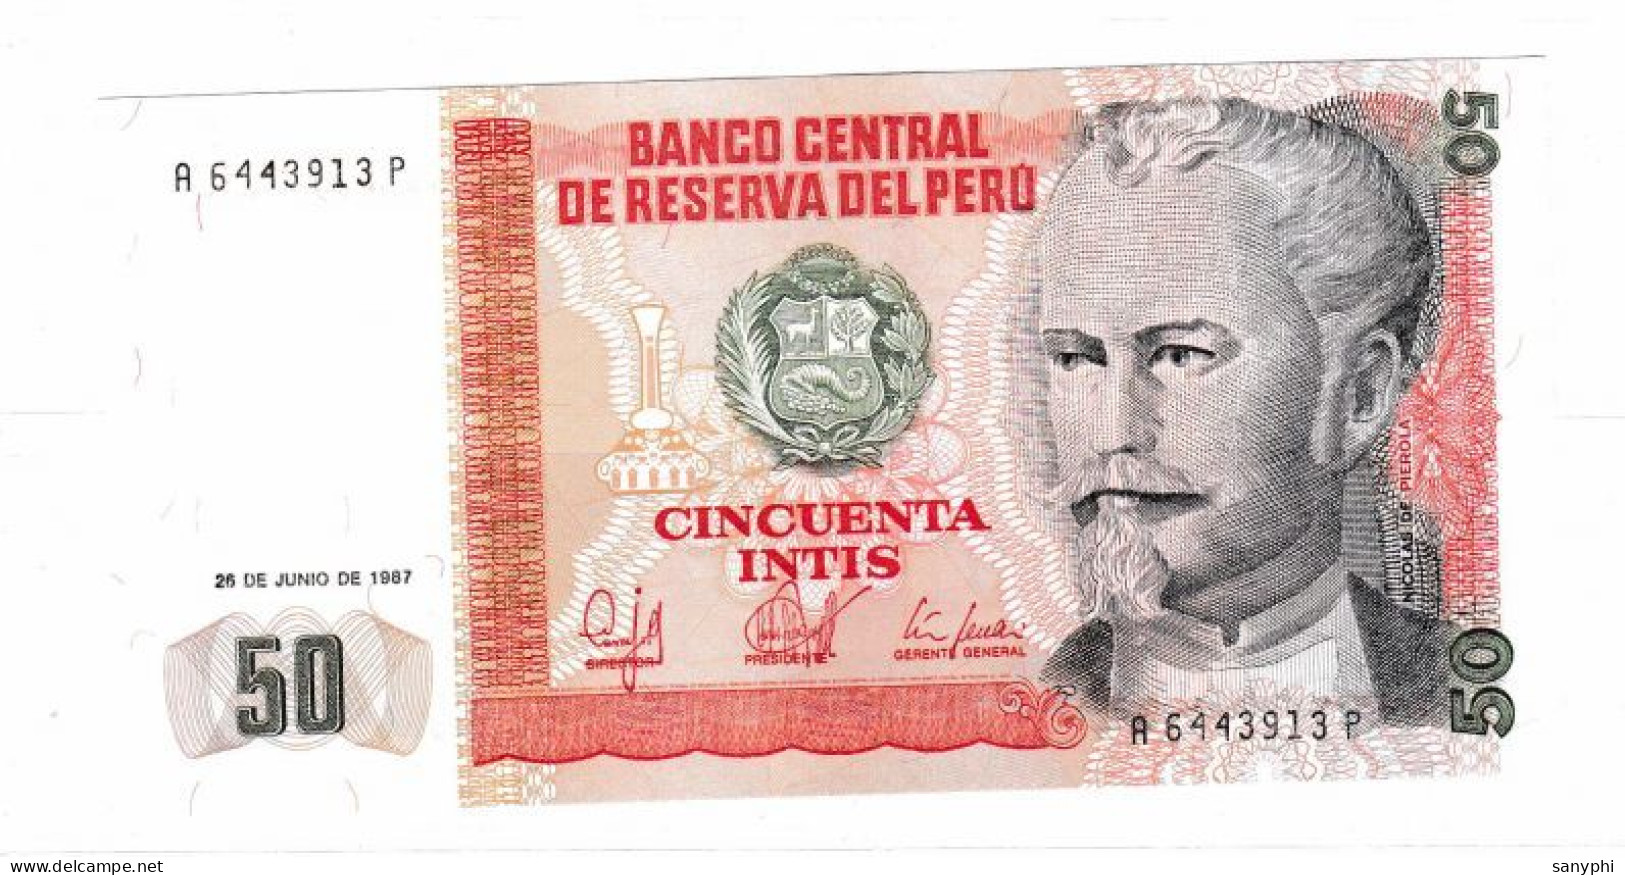 Banco Central De Reserva Del Peru 1987 50s - Peru